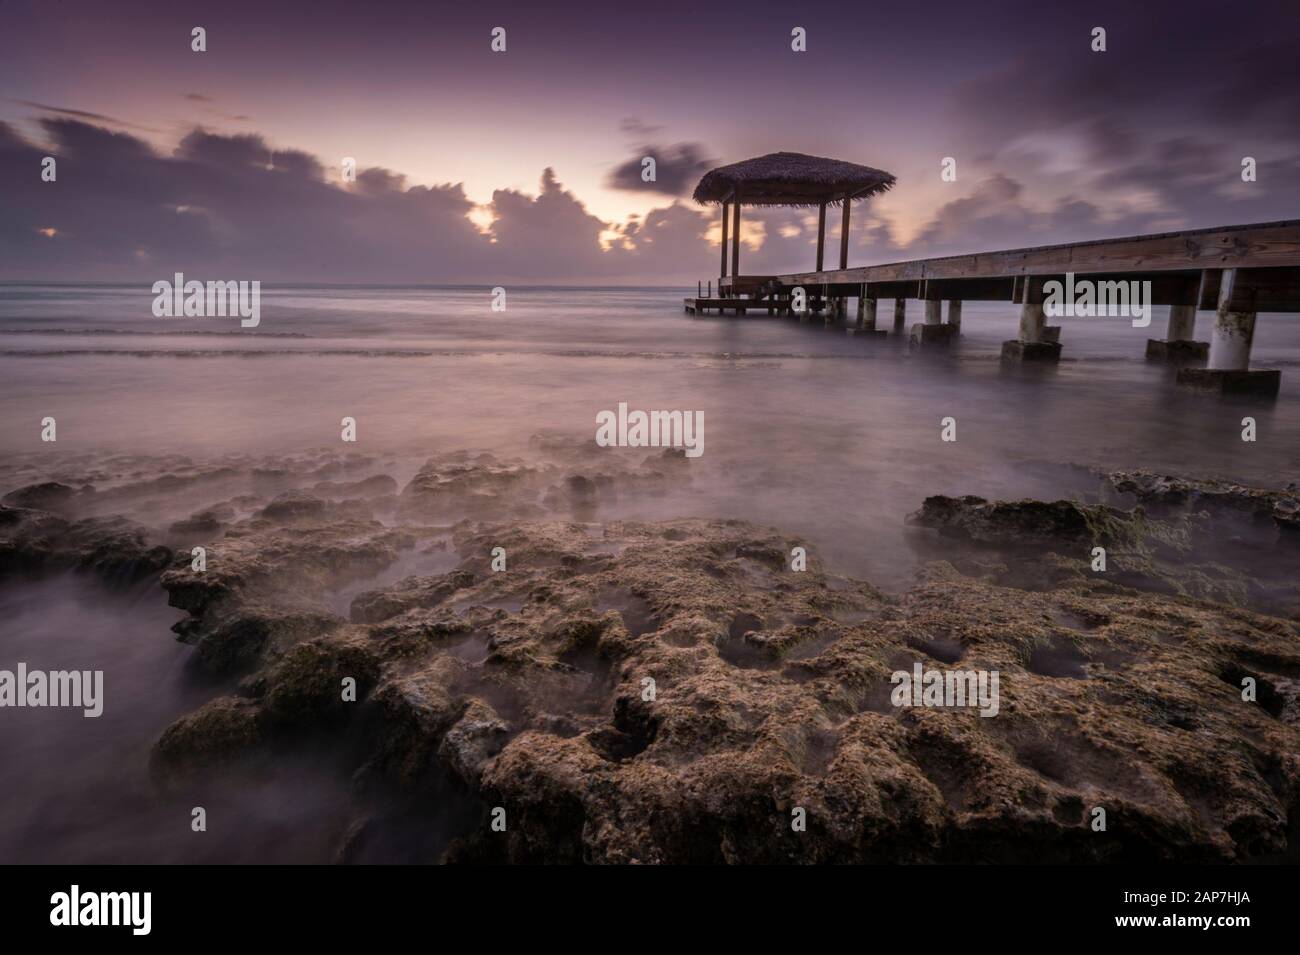 Gazebo on pier with misty waves crashing on rocky shore, Grand Cayman Island Stock Photo